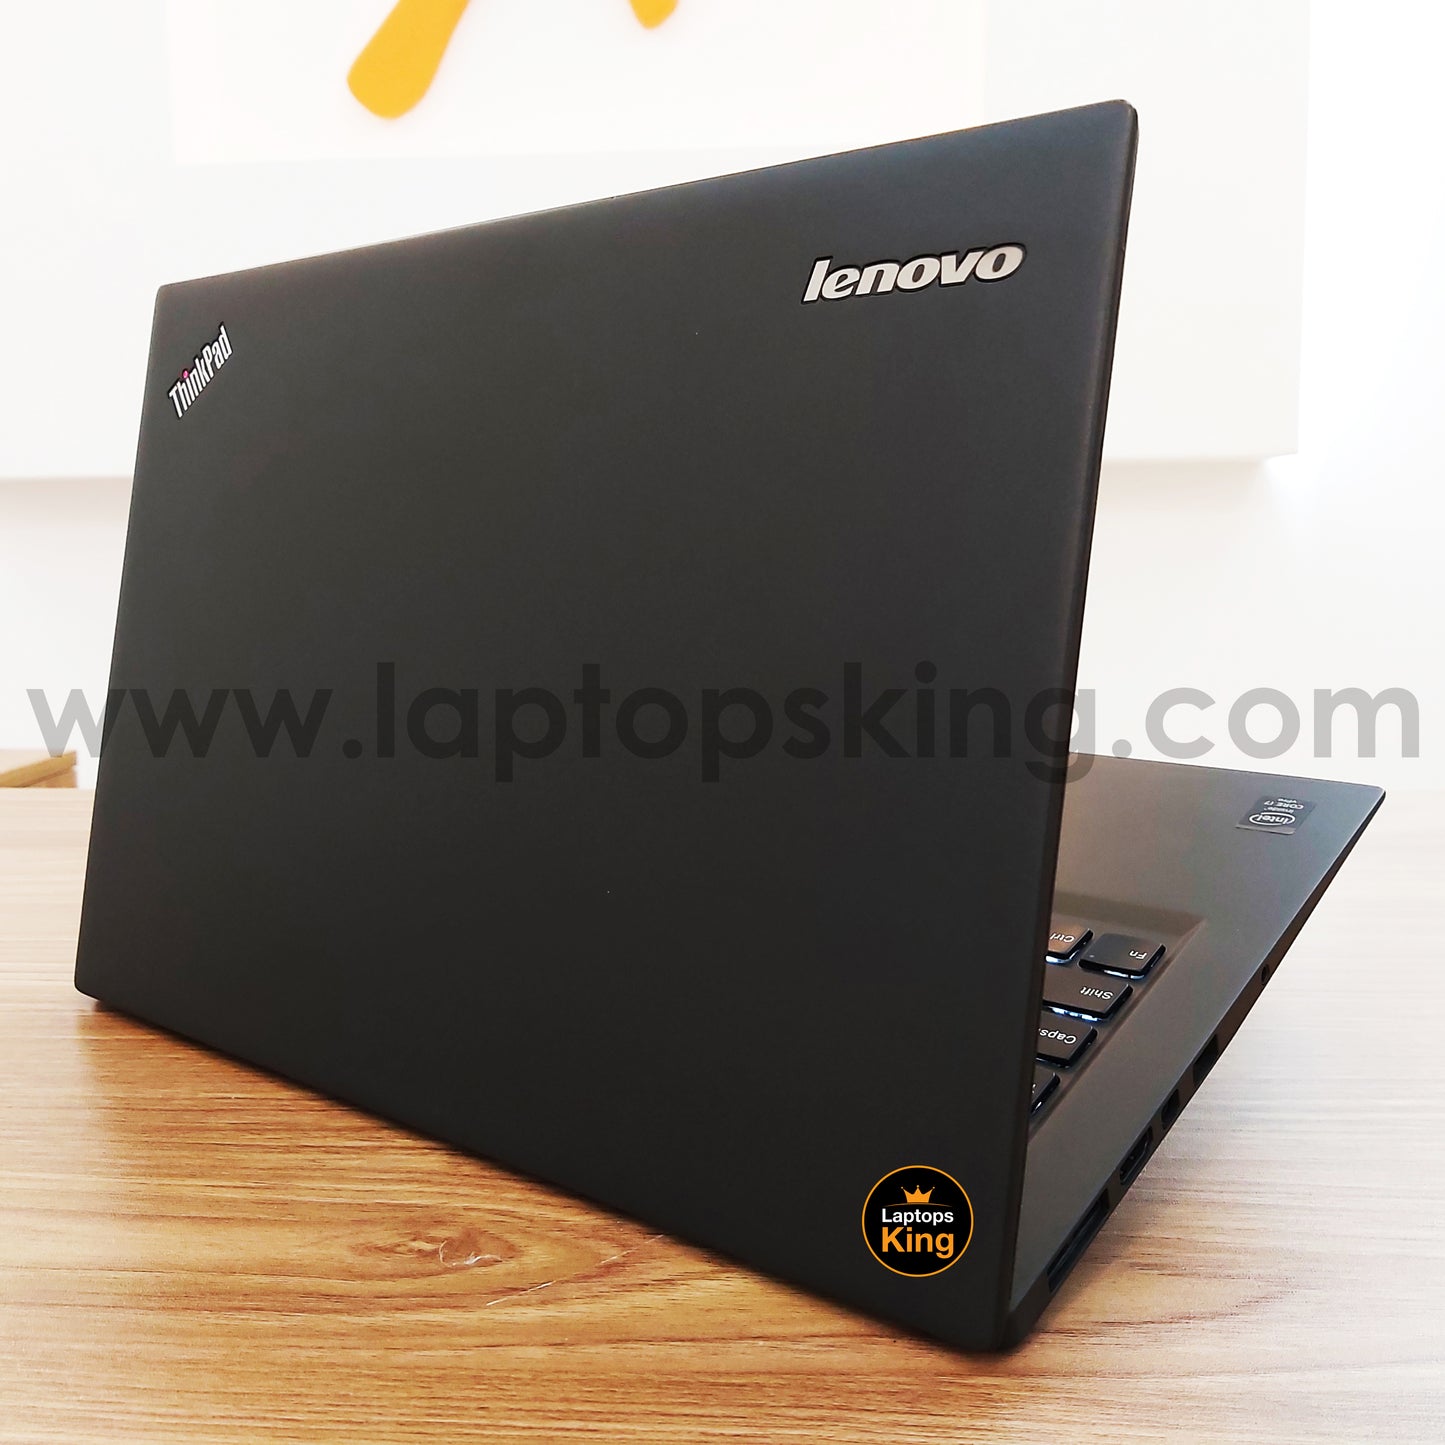 Lenovo ThinkPad X1 Carbon i7 Ultrabook Laptop (Open Box)